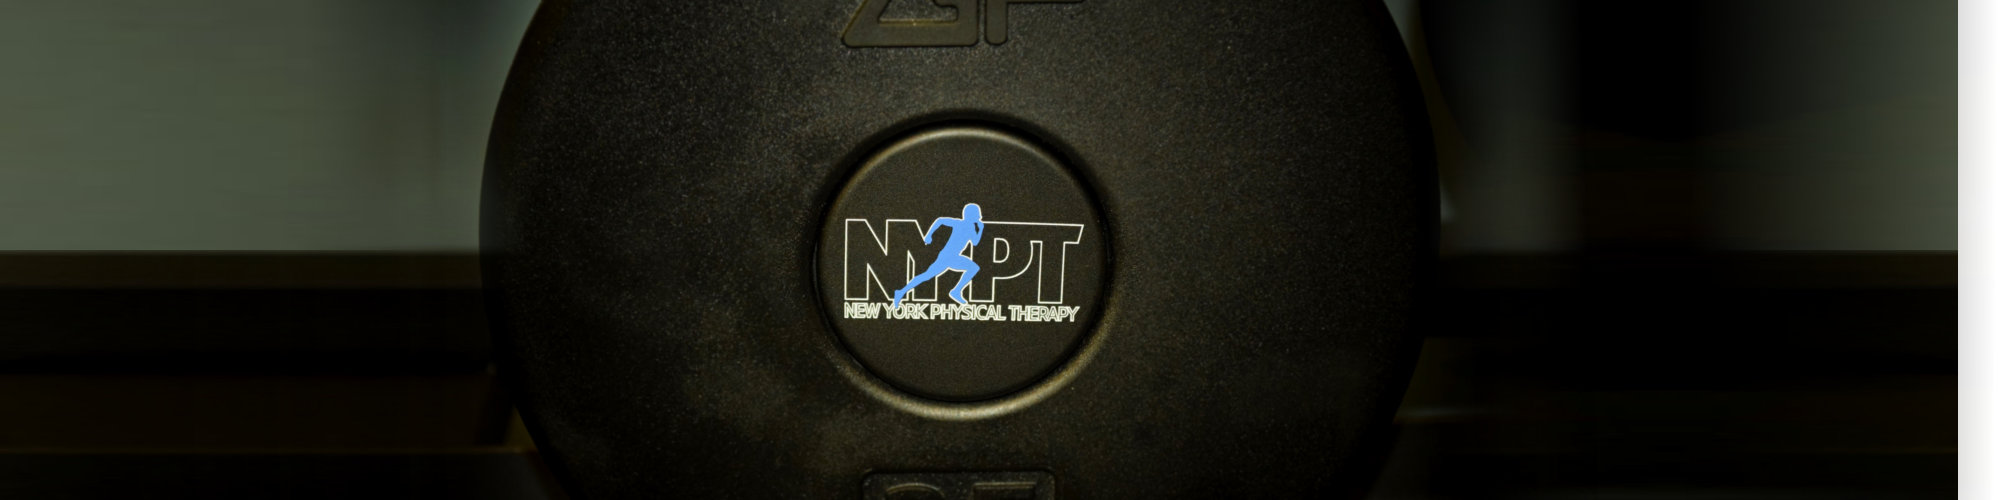 NYPT logo image